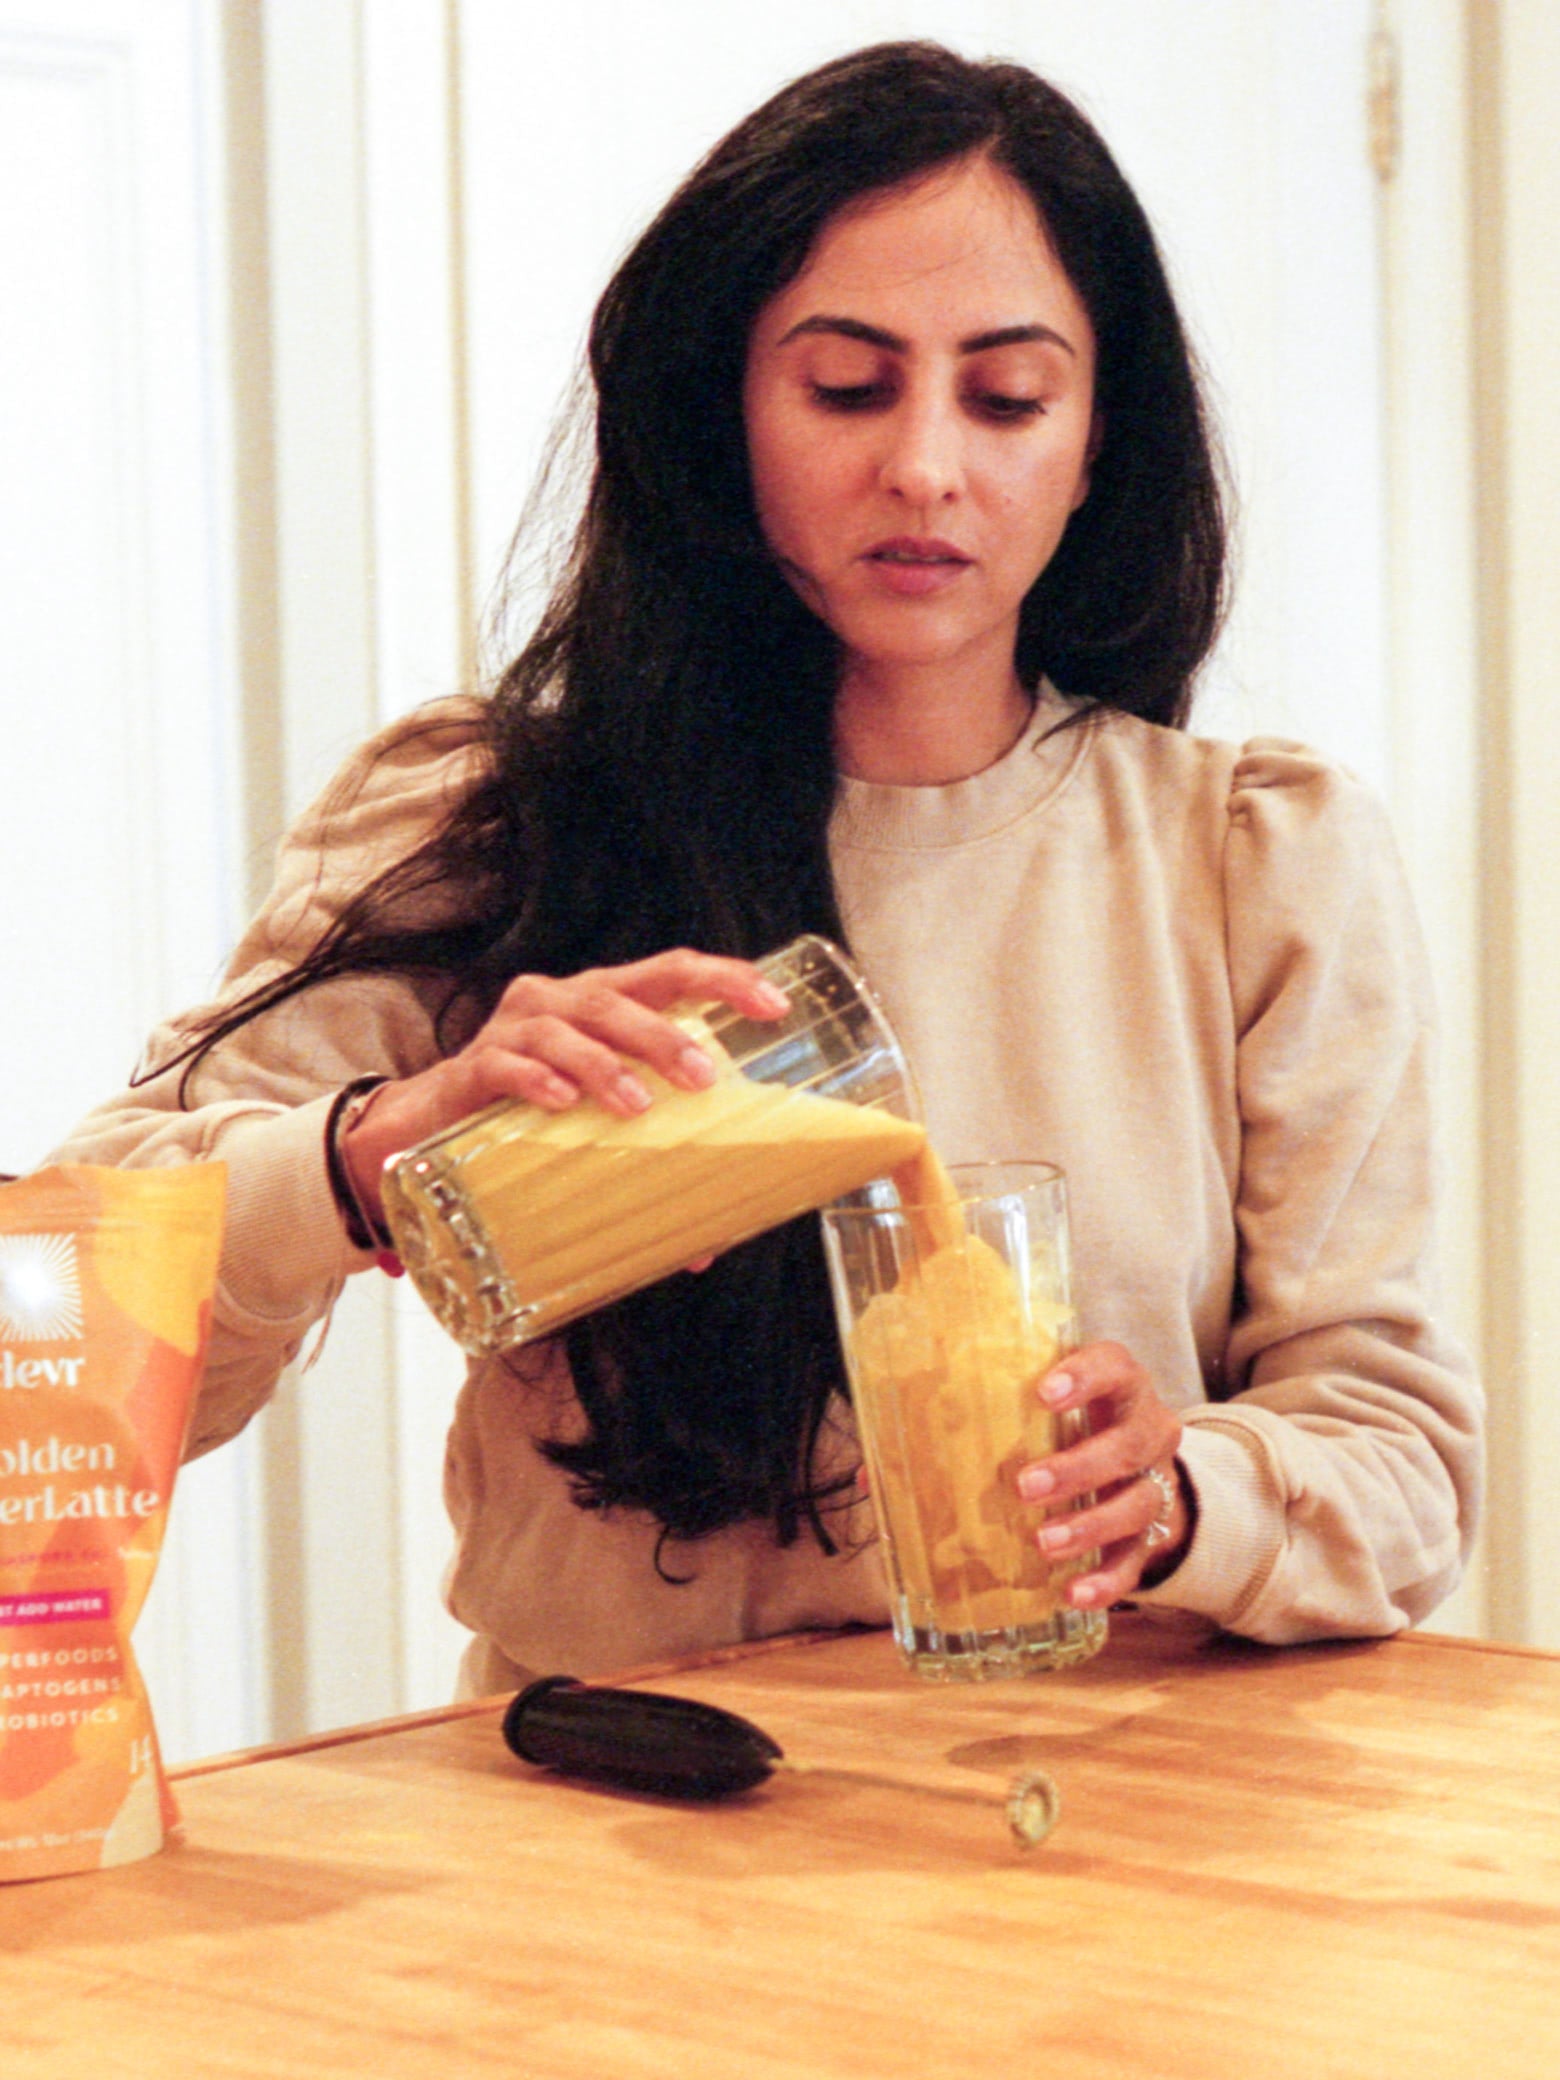 Michelle Ranavat pouring herself a golden latte